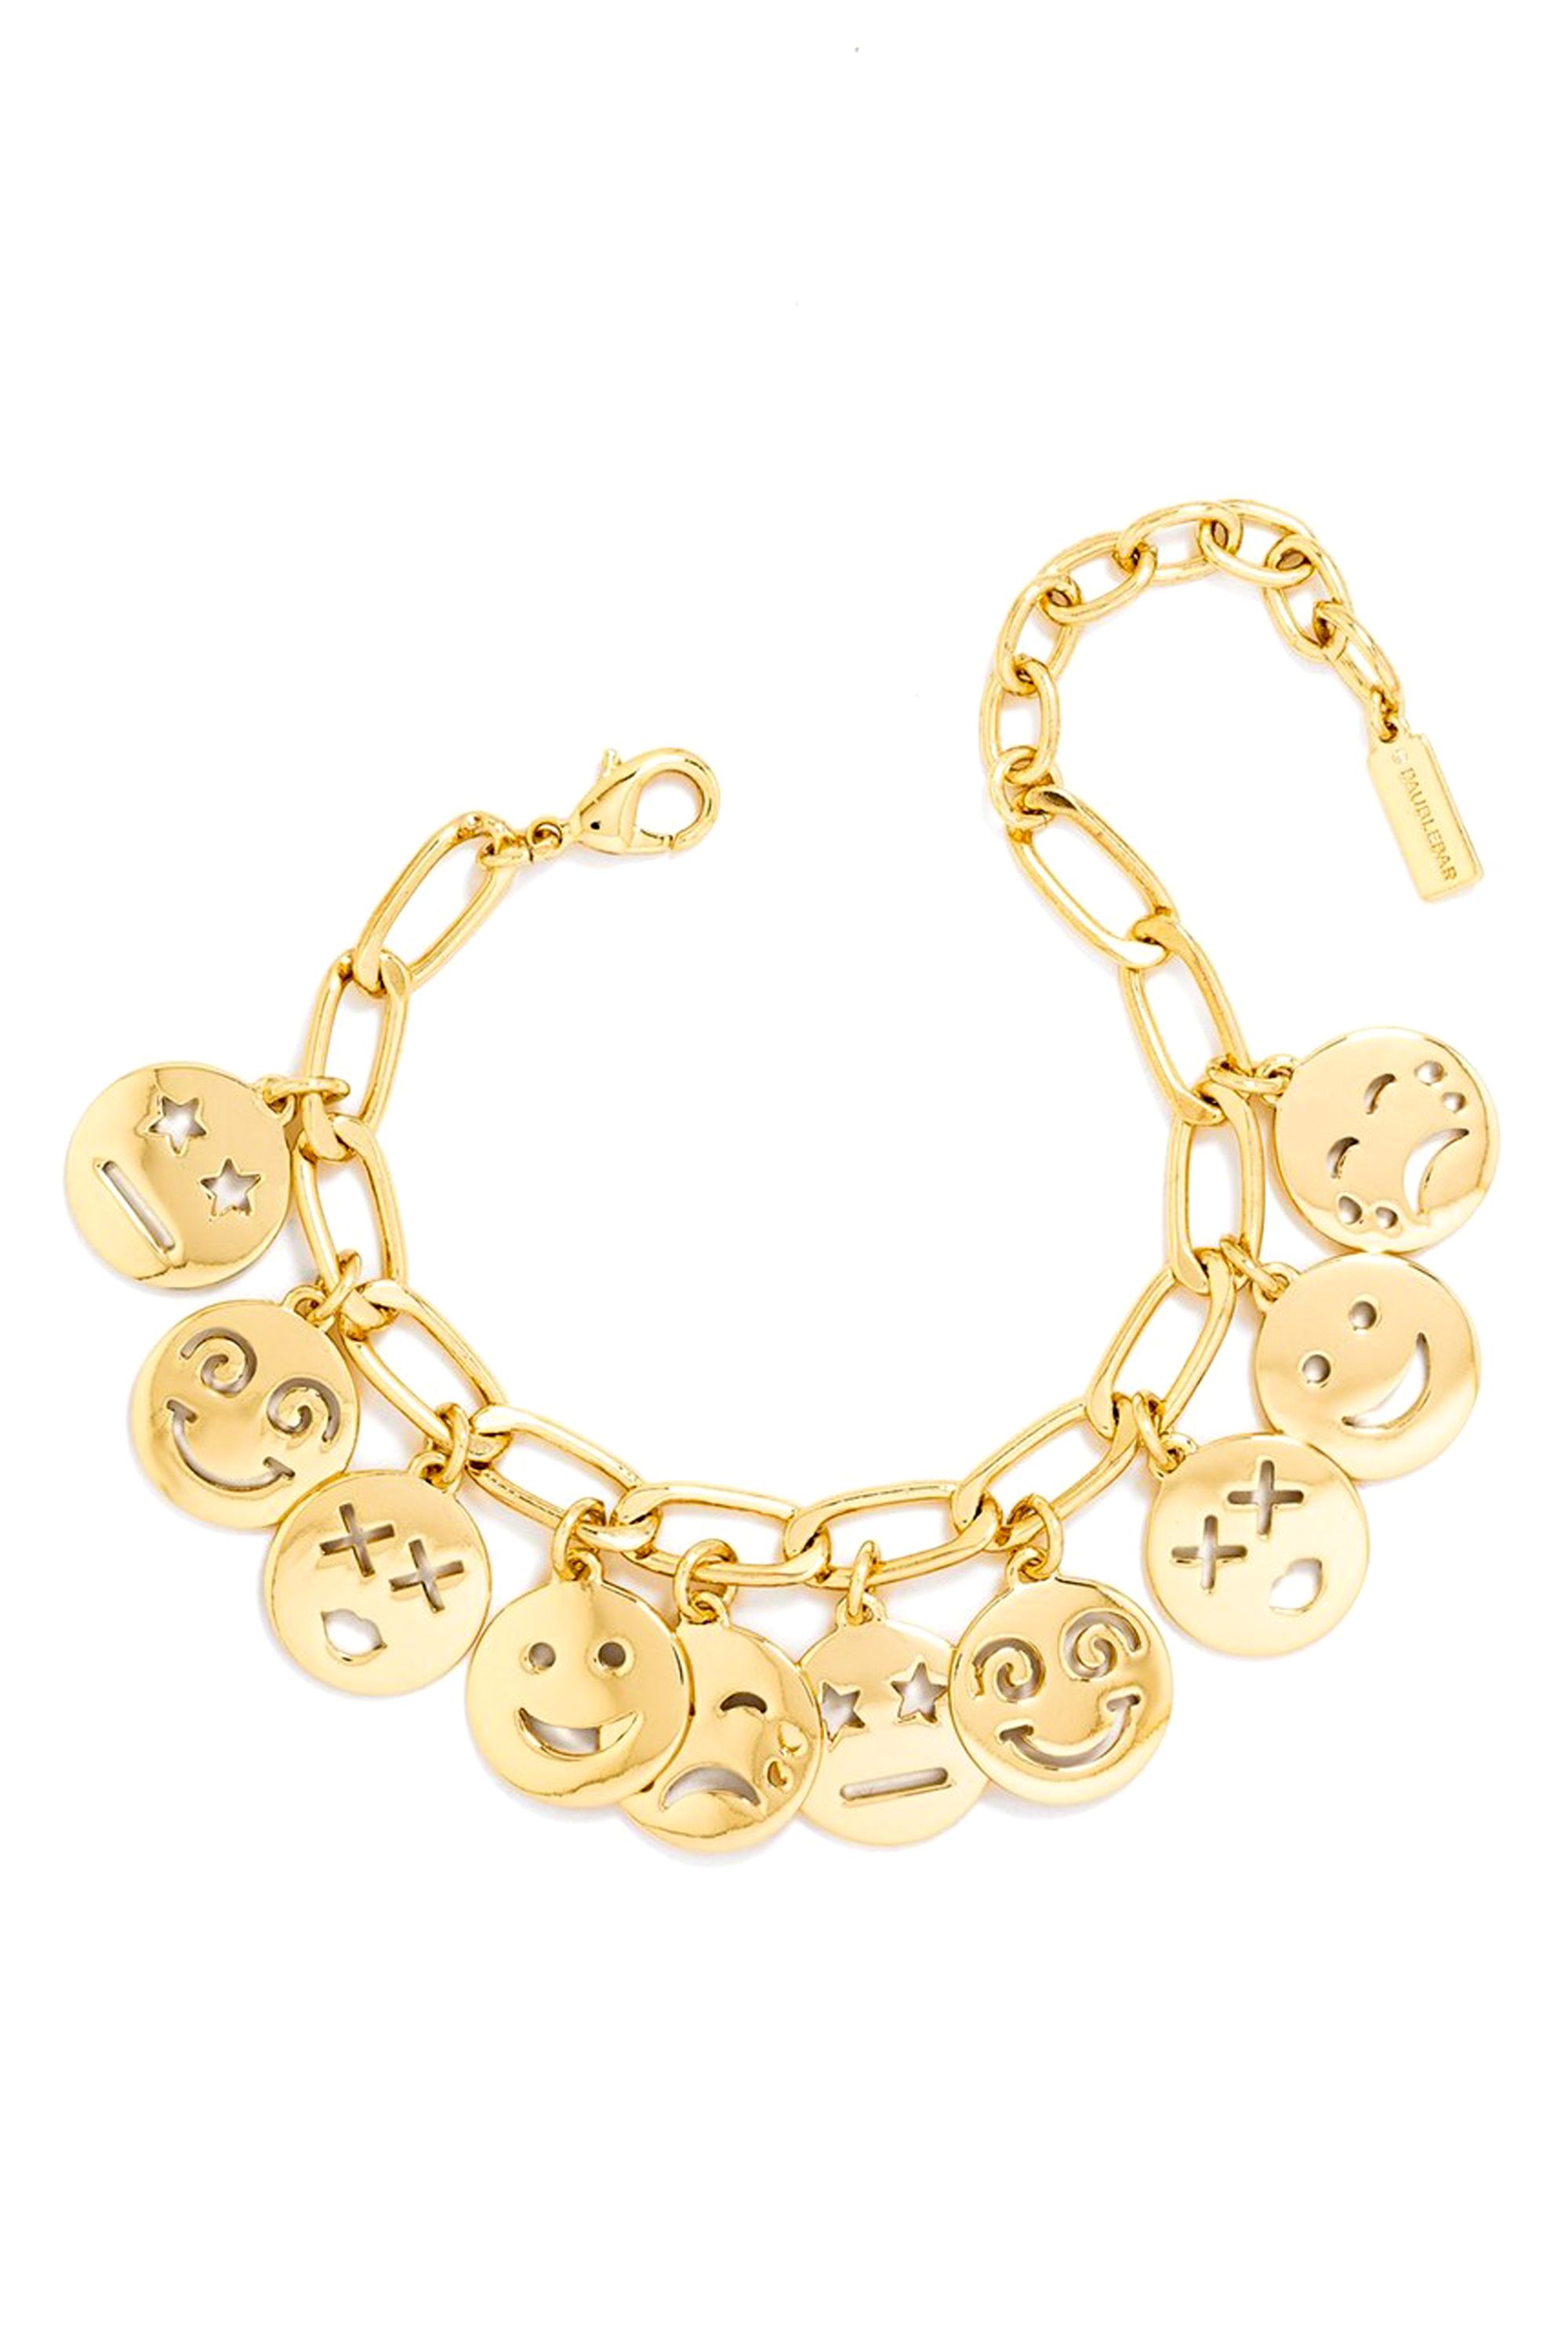 Gemstone Fertility Wish Bracelet  Meaningful Charm